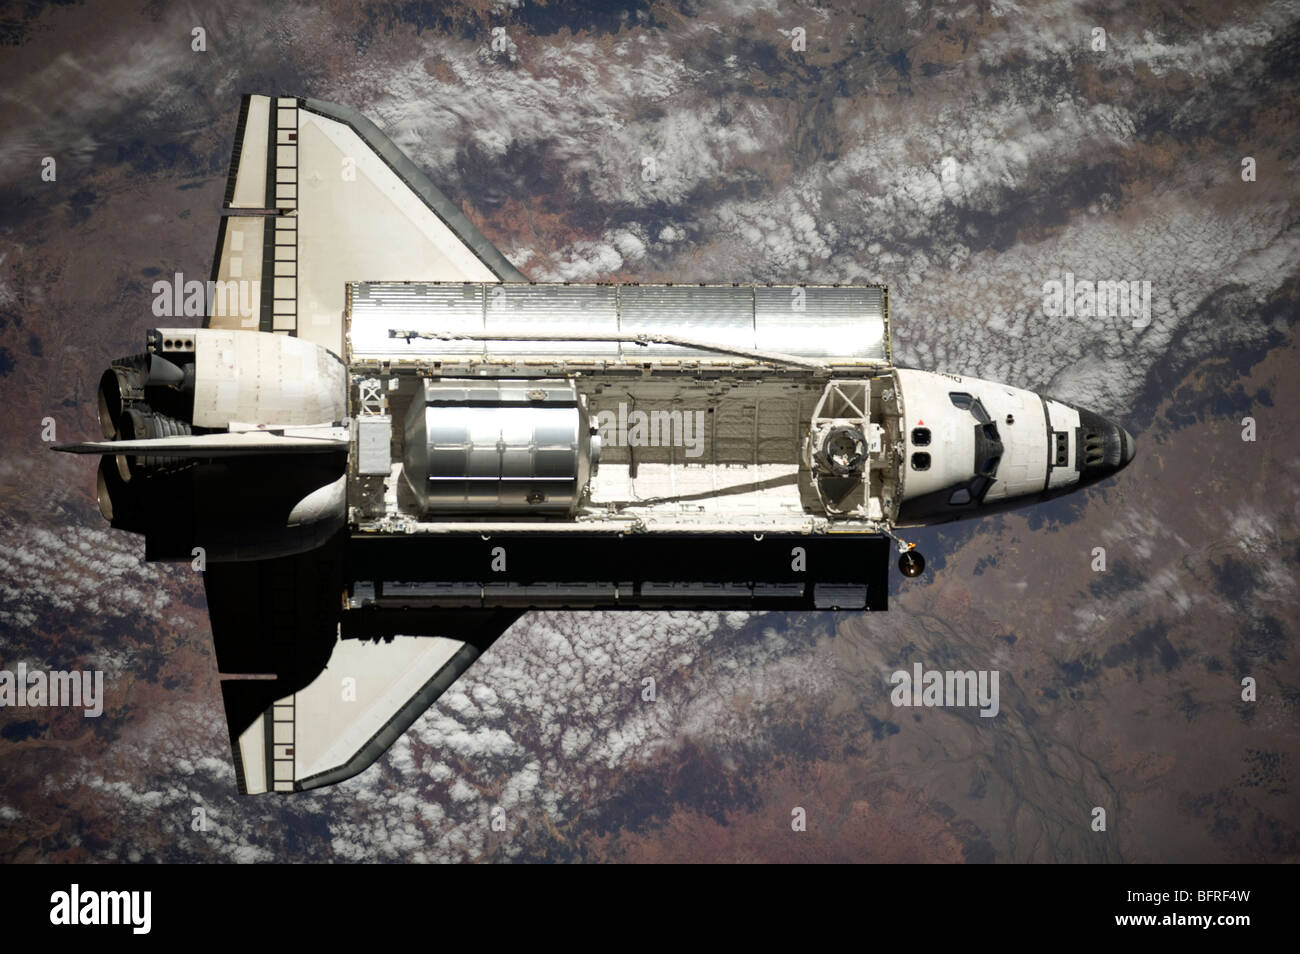 Transbordador Espacial Discovery Foto de stock